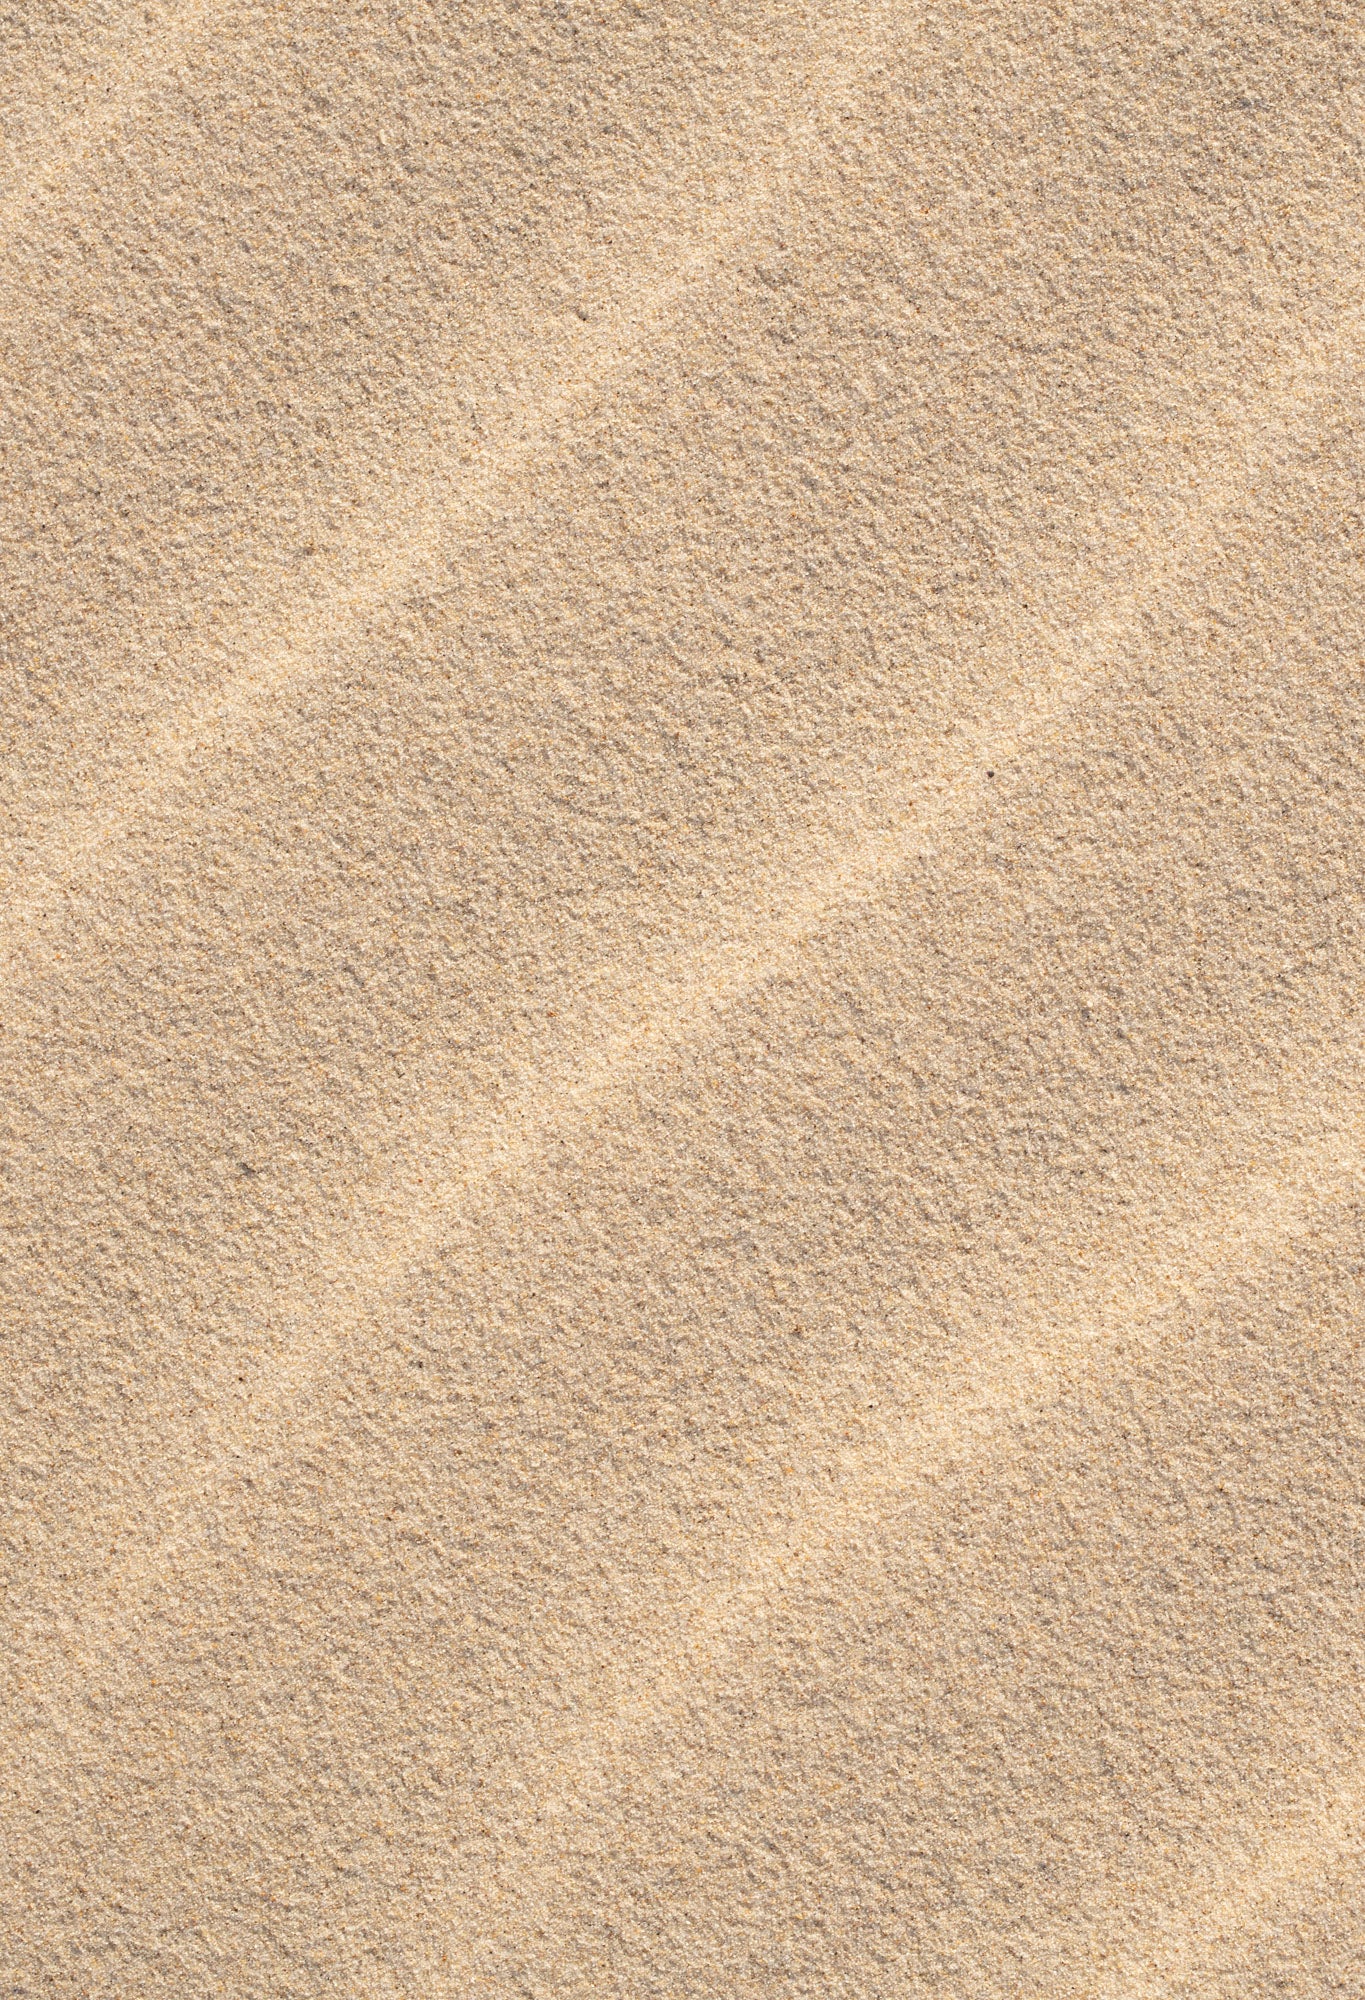 Image 19 - Sand Lines